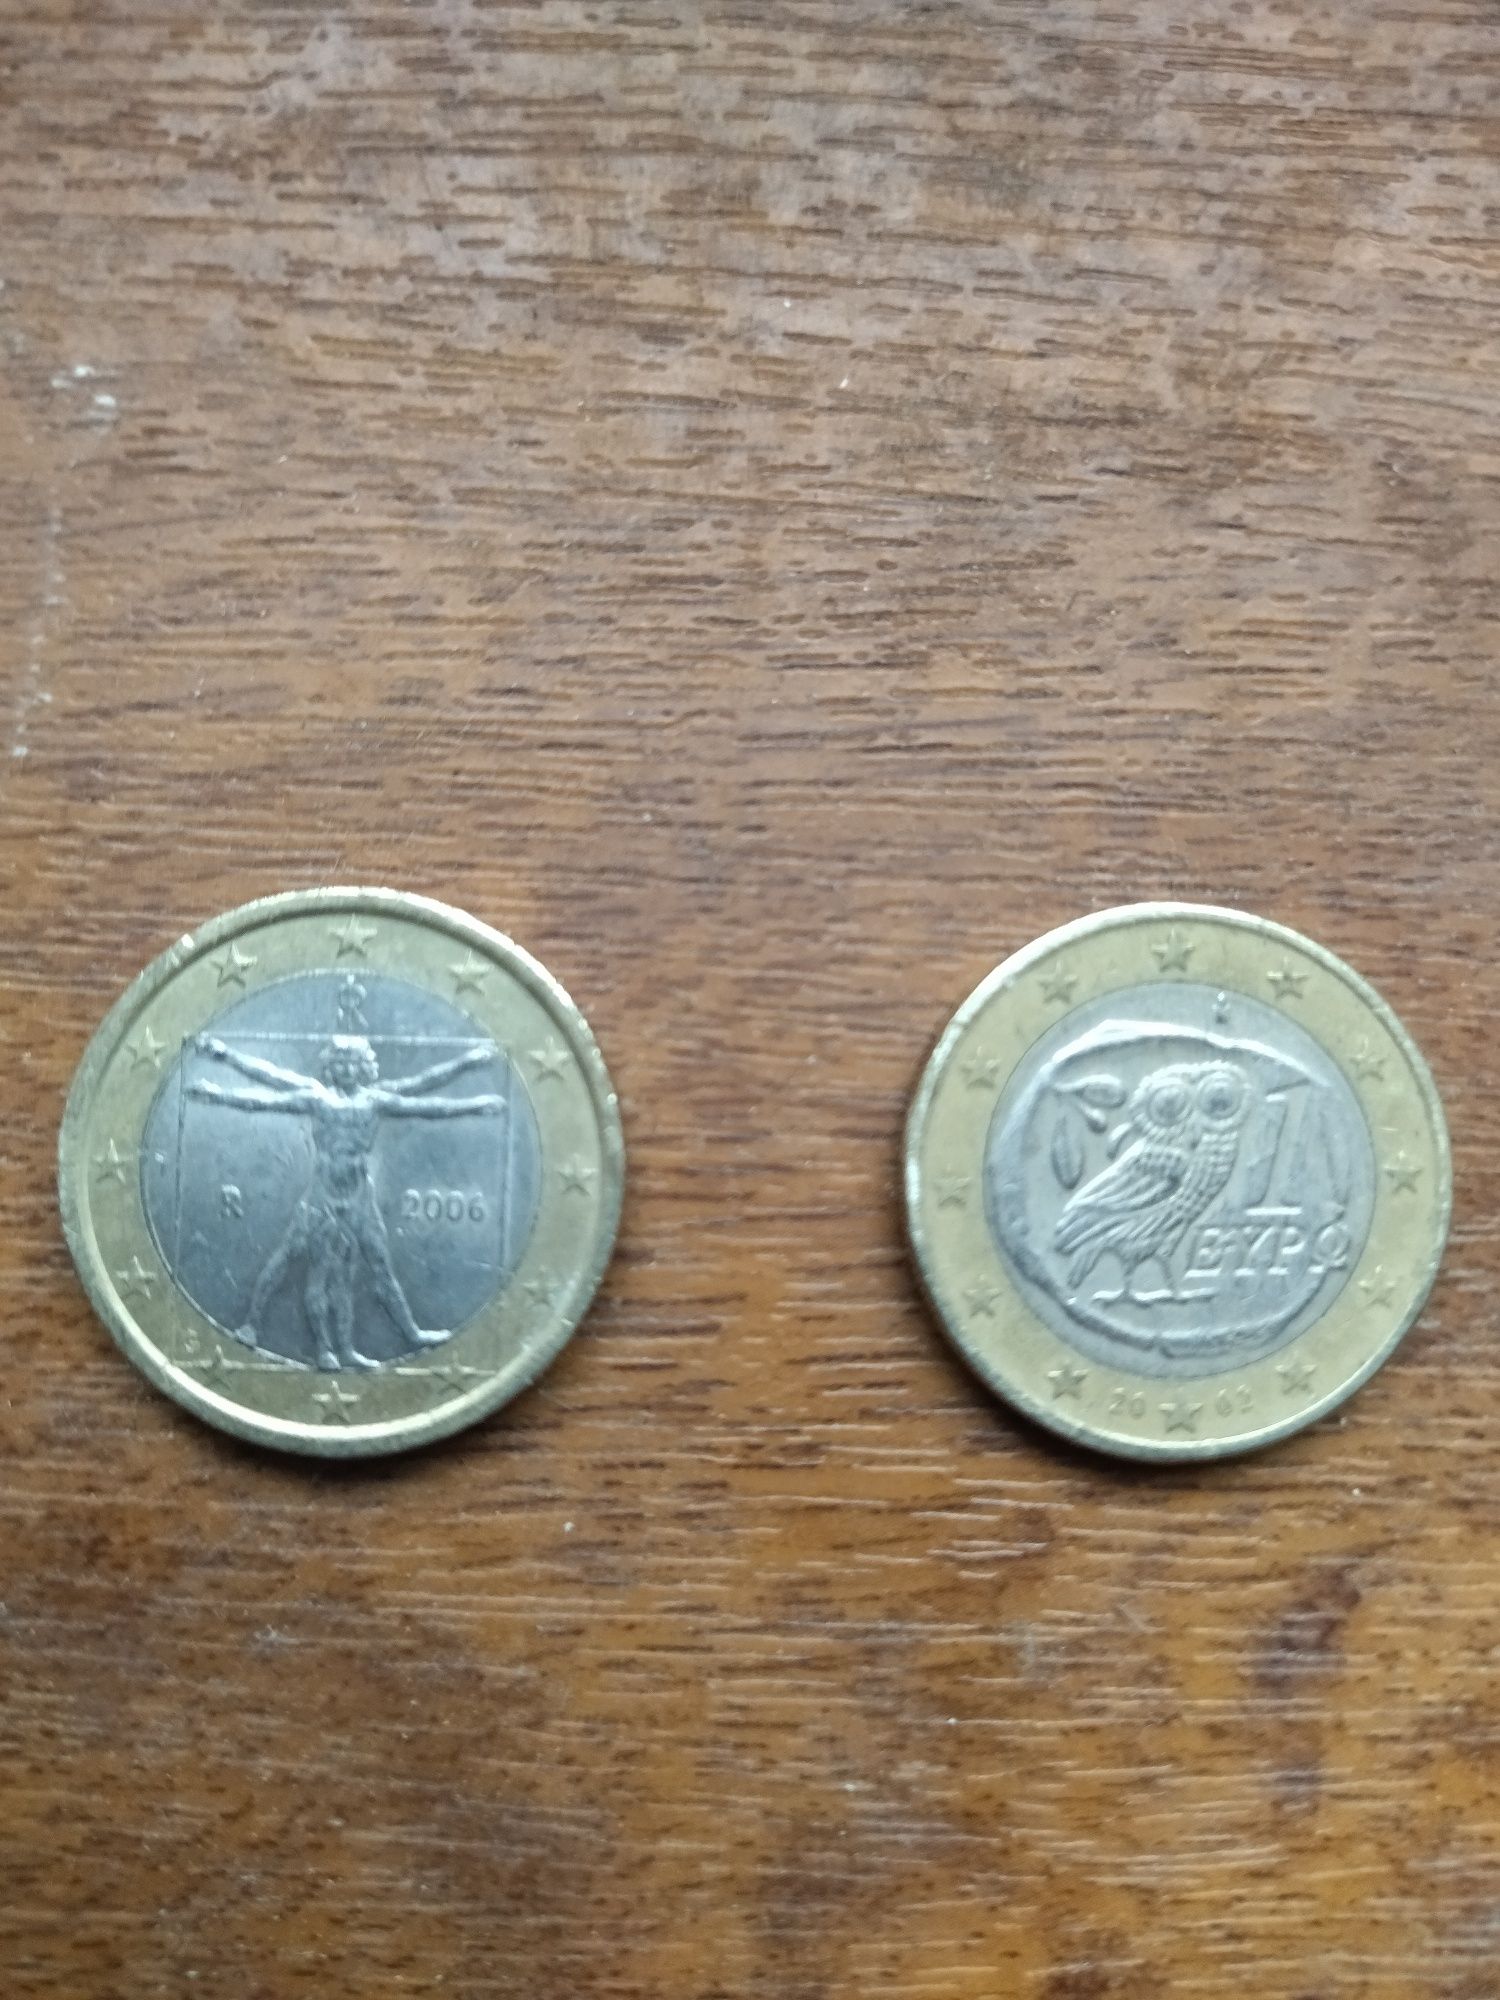 Monede de 1 € pentru colectionari